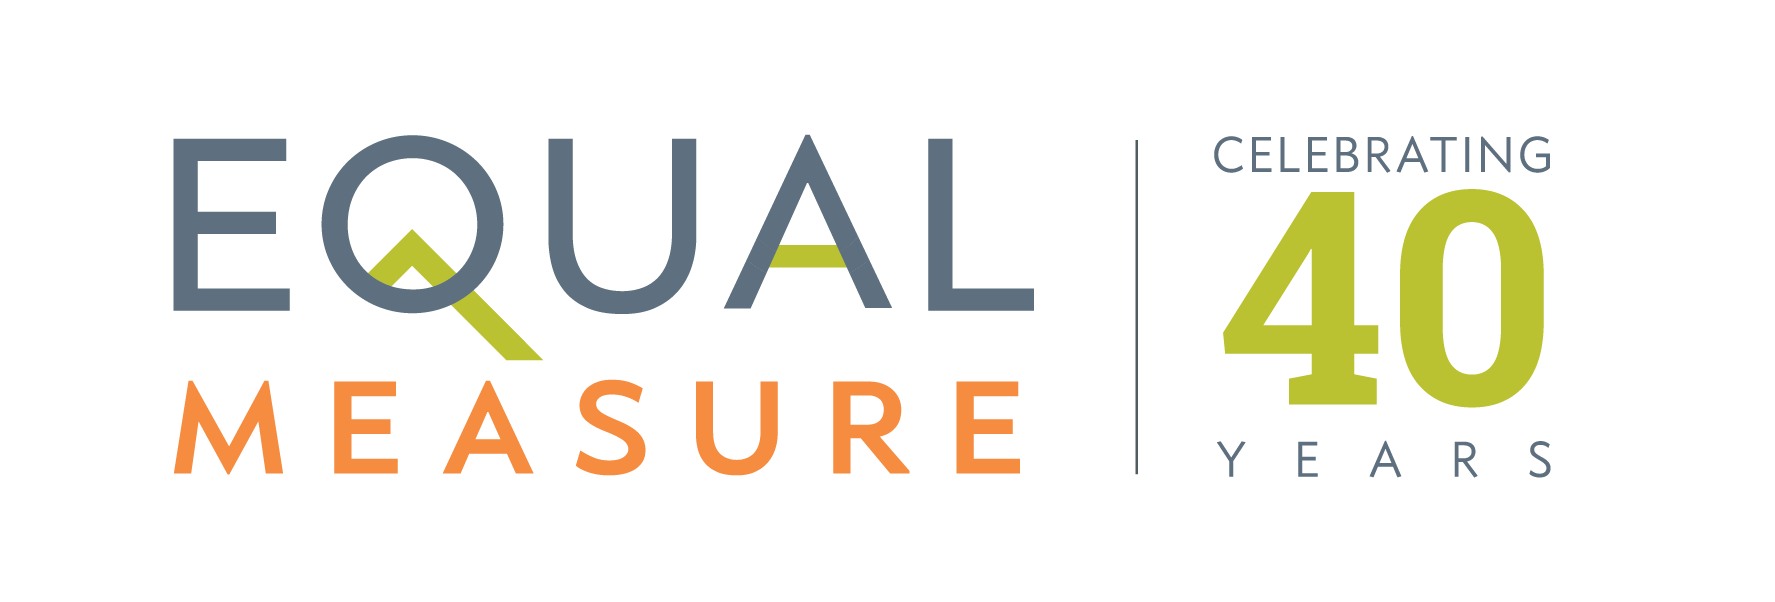 Equal Measure-40 years logo